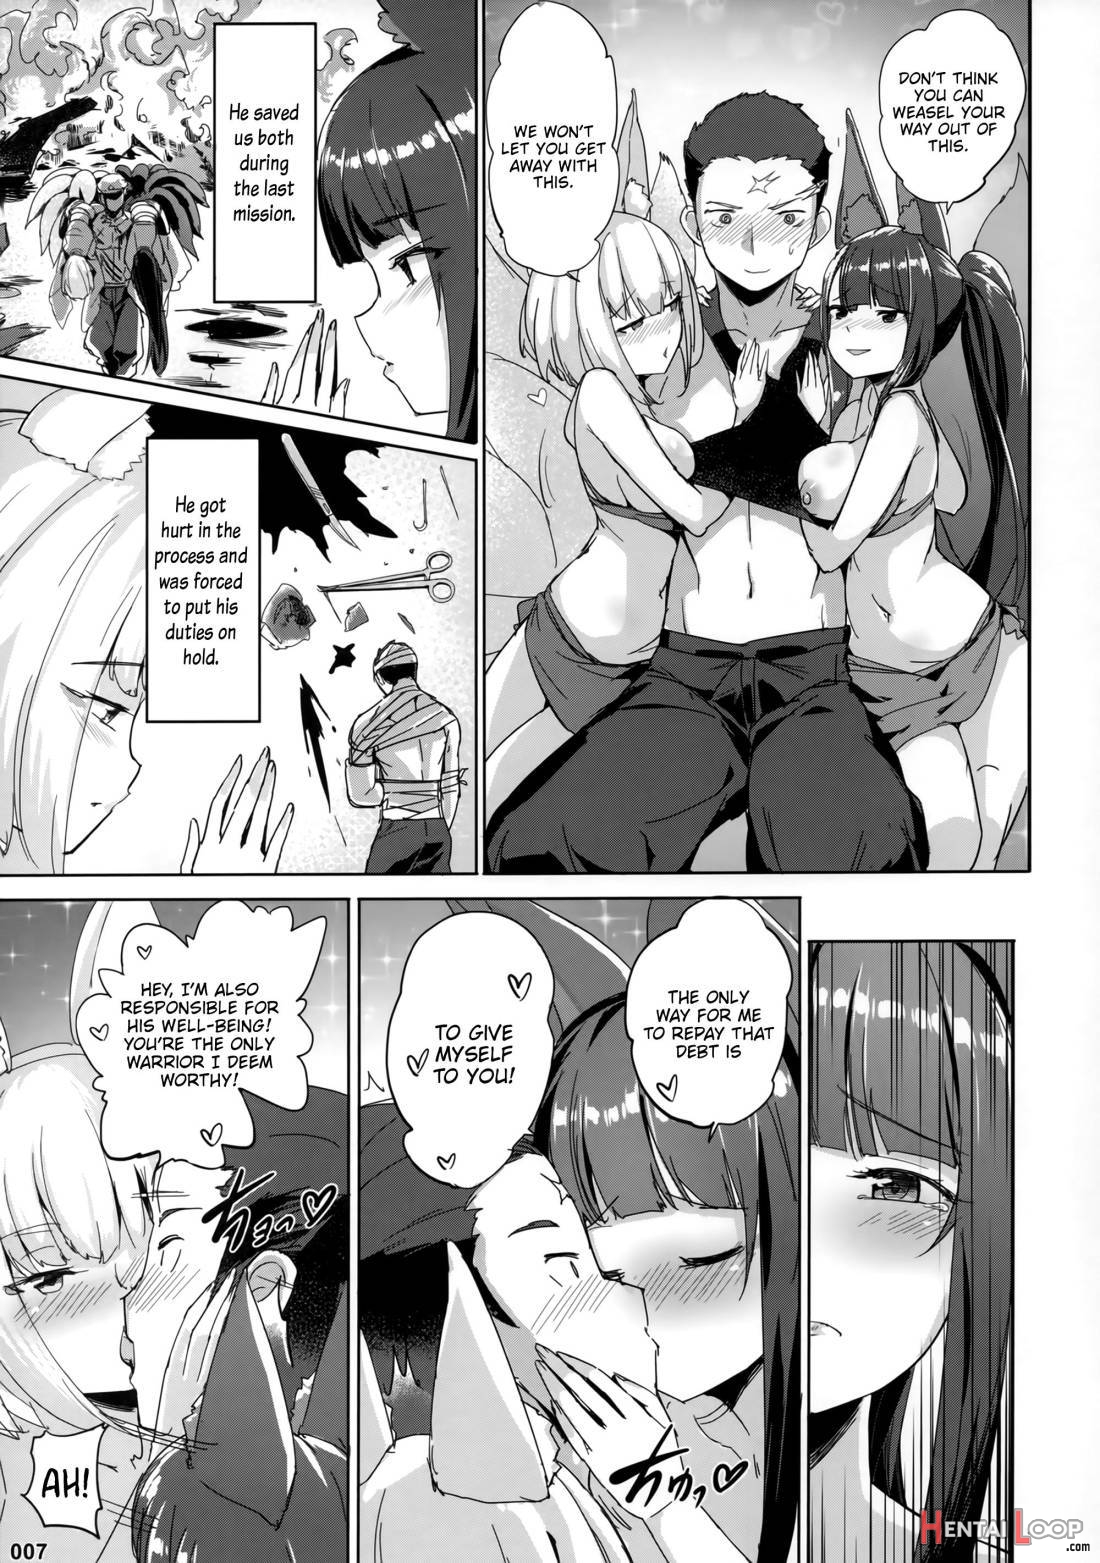 Akagi Kaga Don page 7